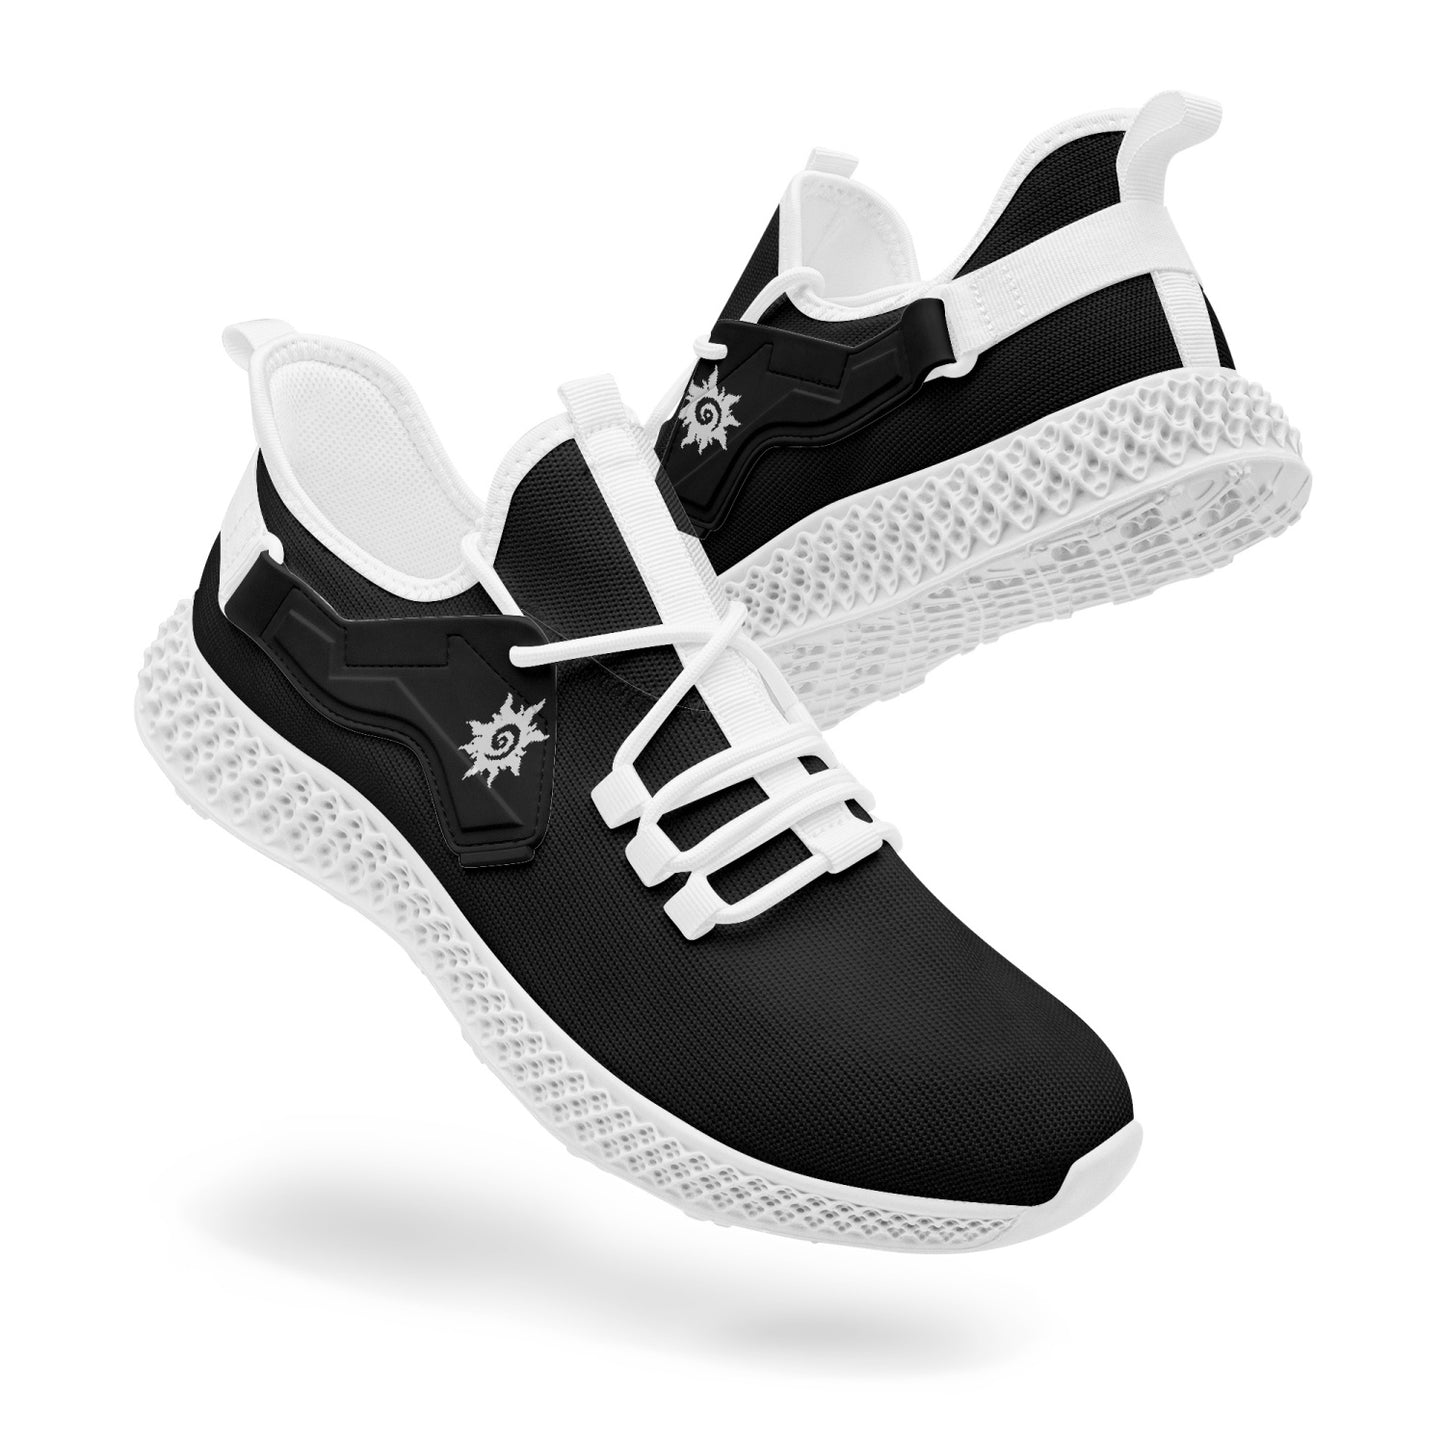 Unisex Net Style Mesh Knit Sneakers ActSun